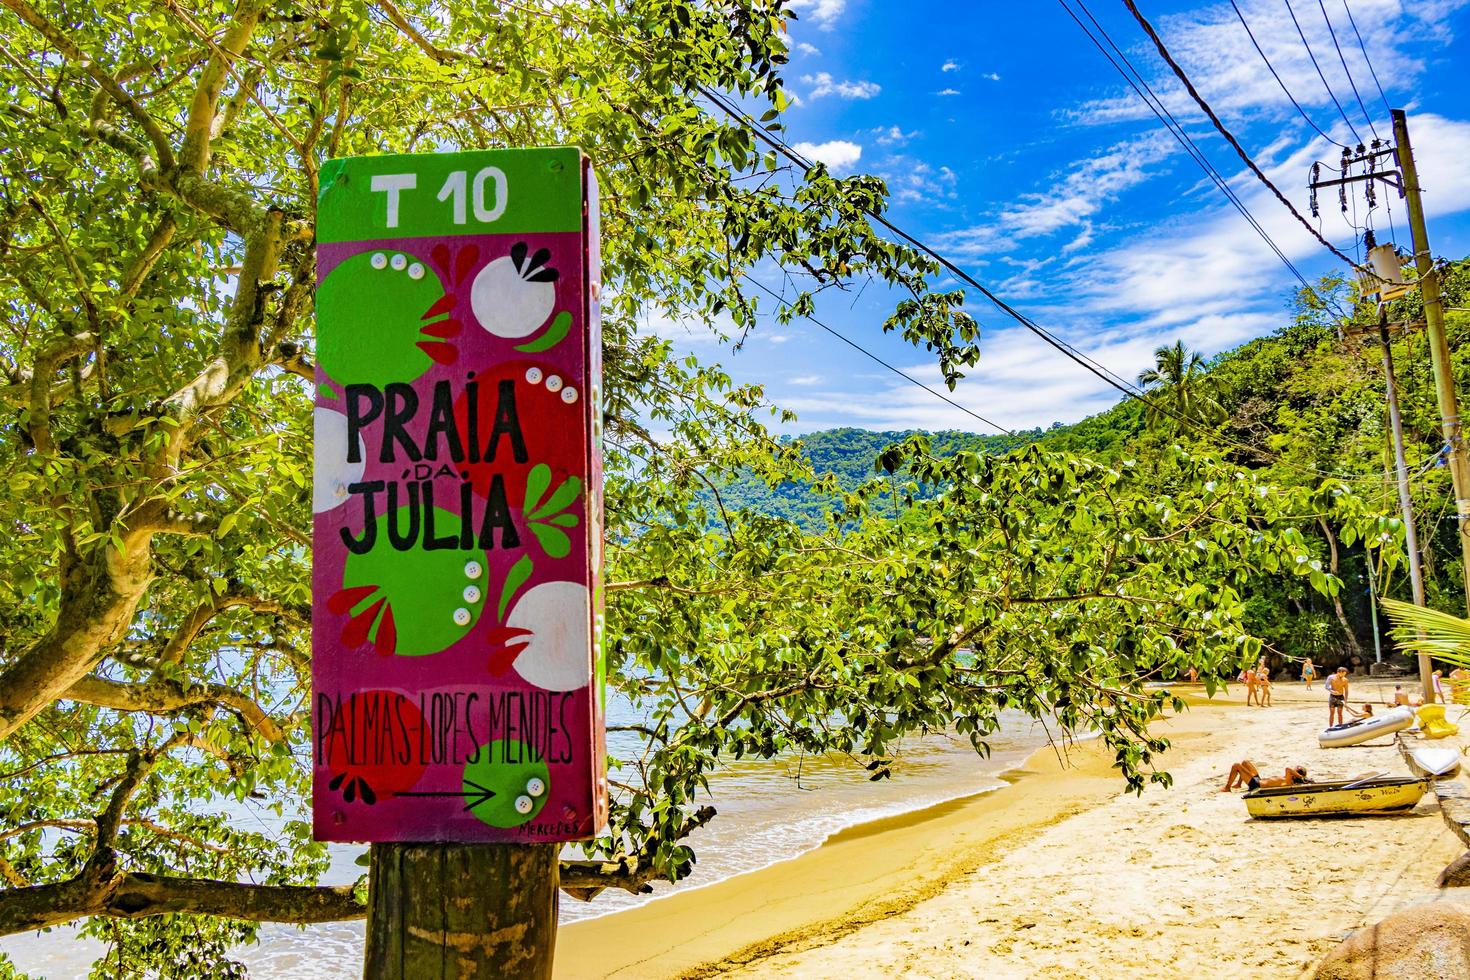 praia da julia, brasil, 23 de noviembre de 2020 - cartel de bienvenida a la playa praia da julia foto